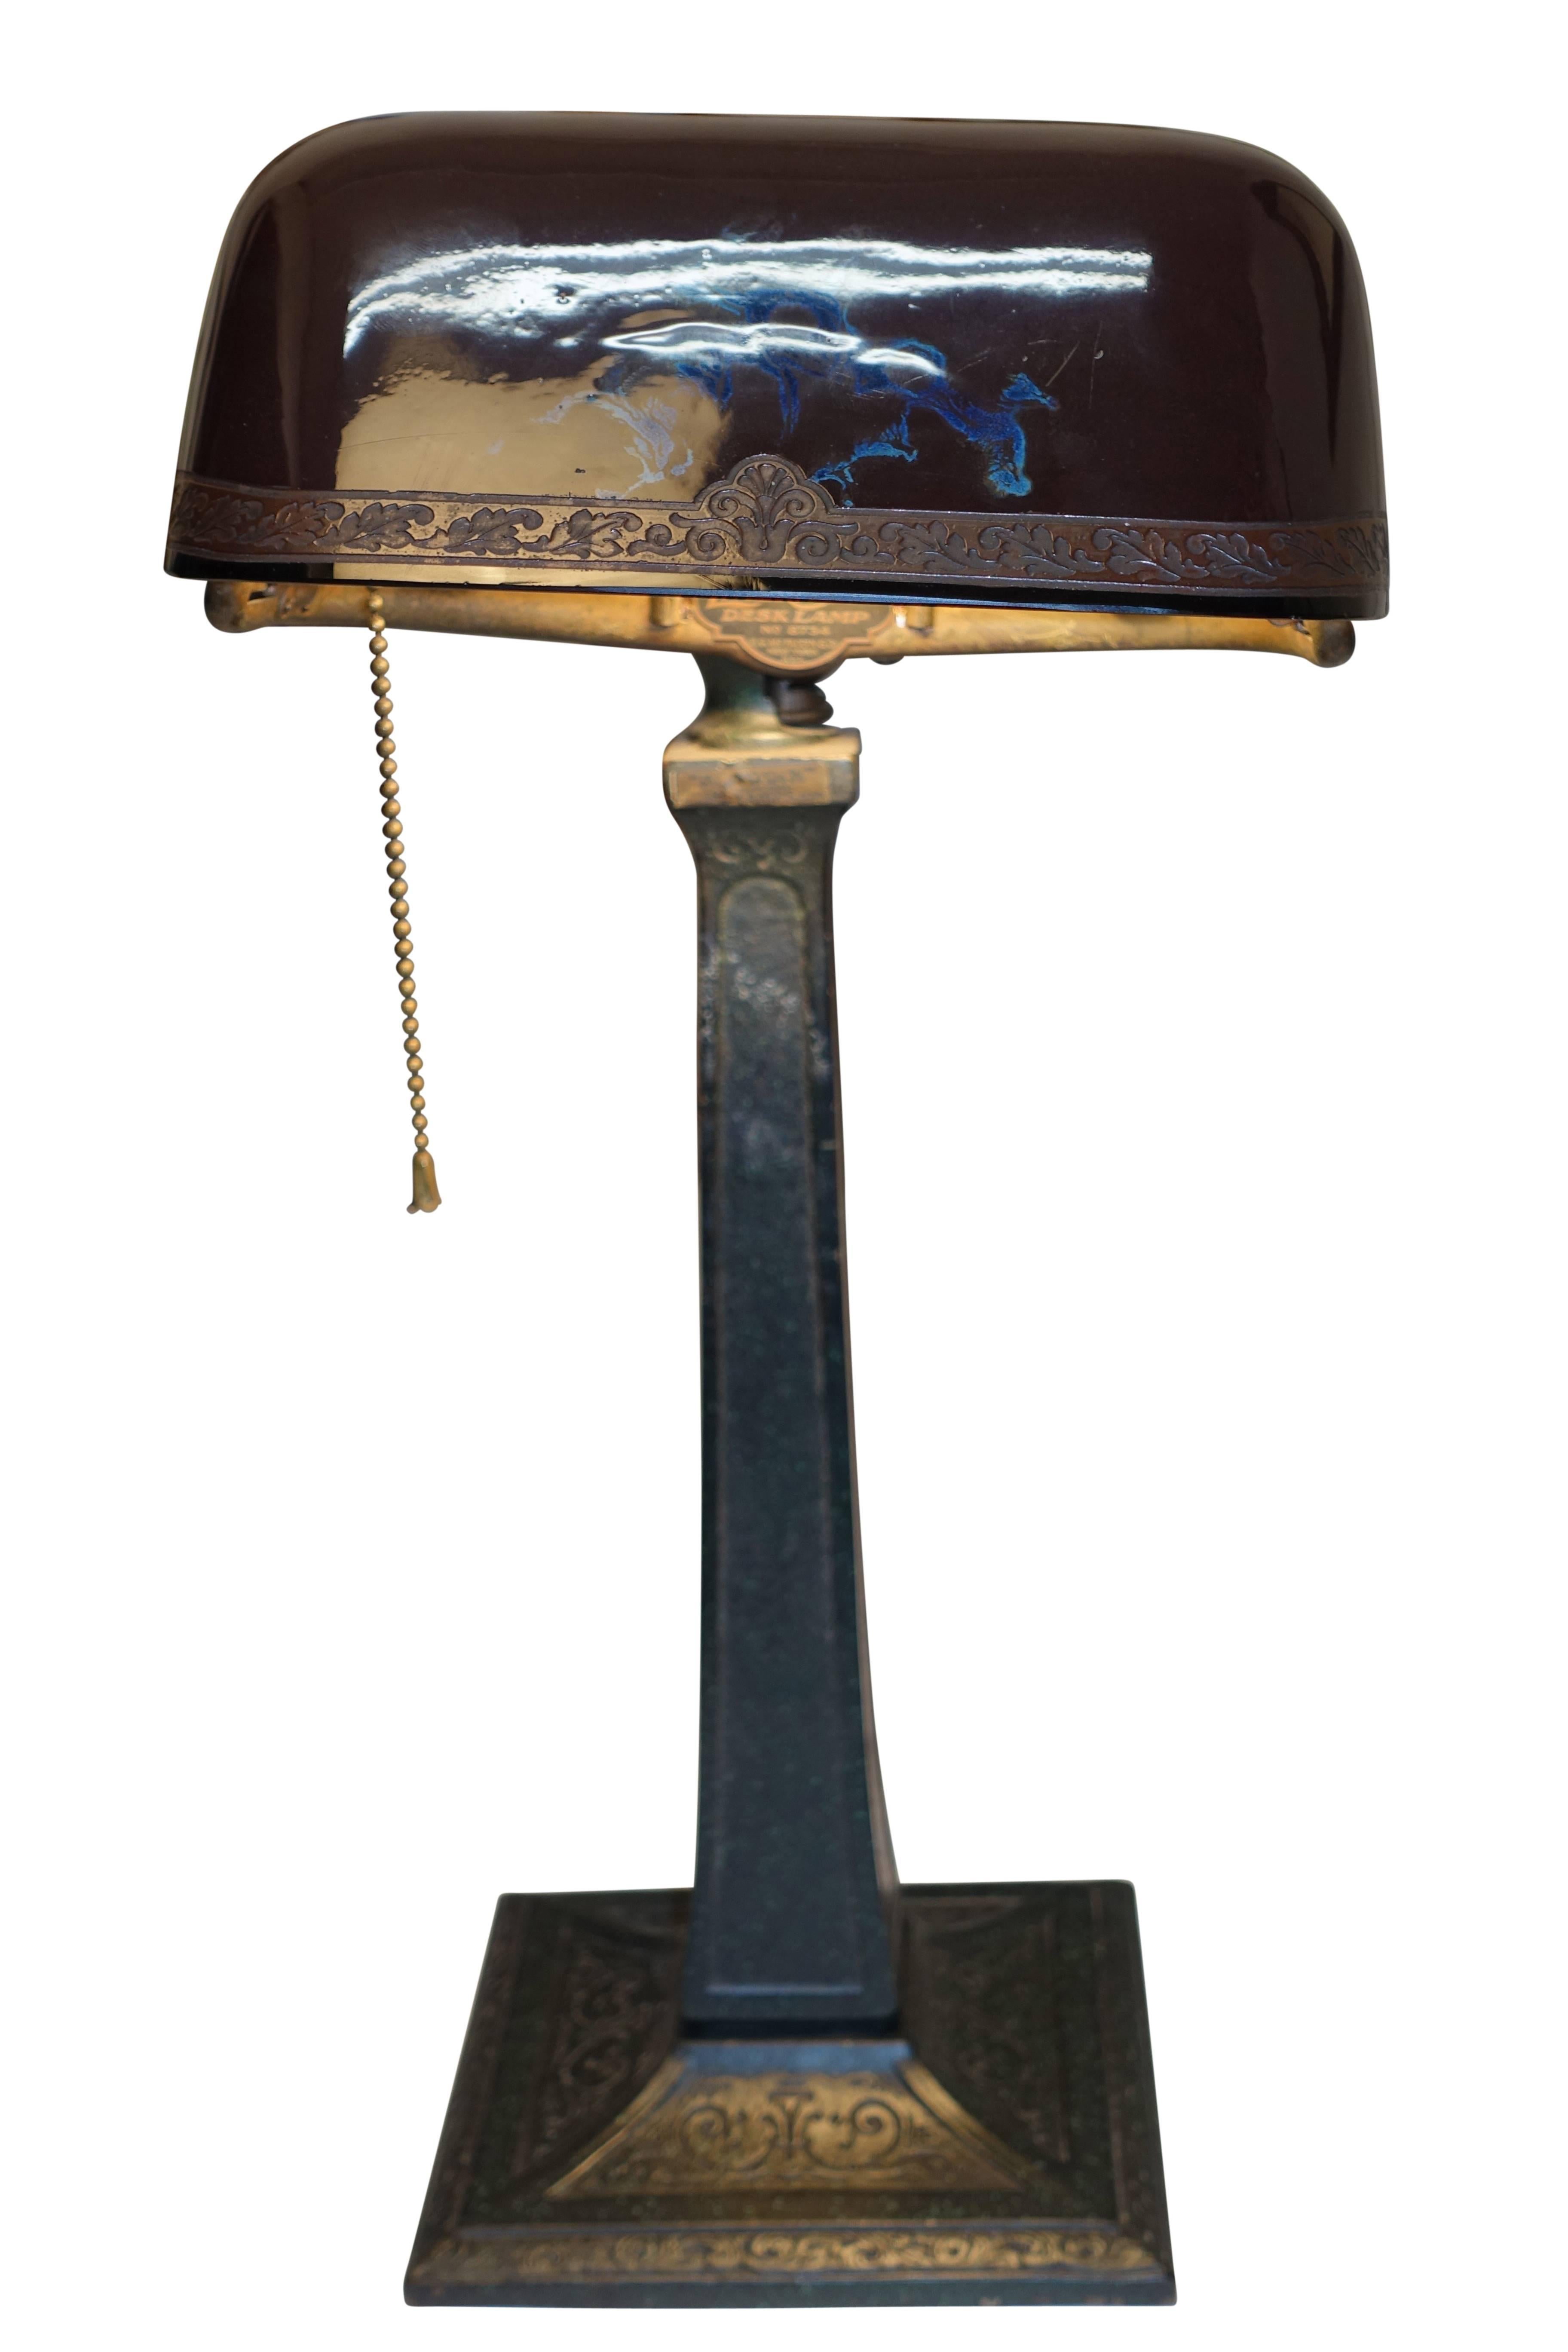 Emeralite Desk Lamp with Cased Glass Shade, American, circa 1915 2